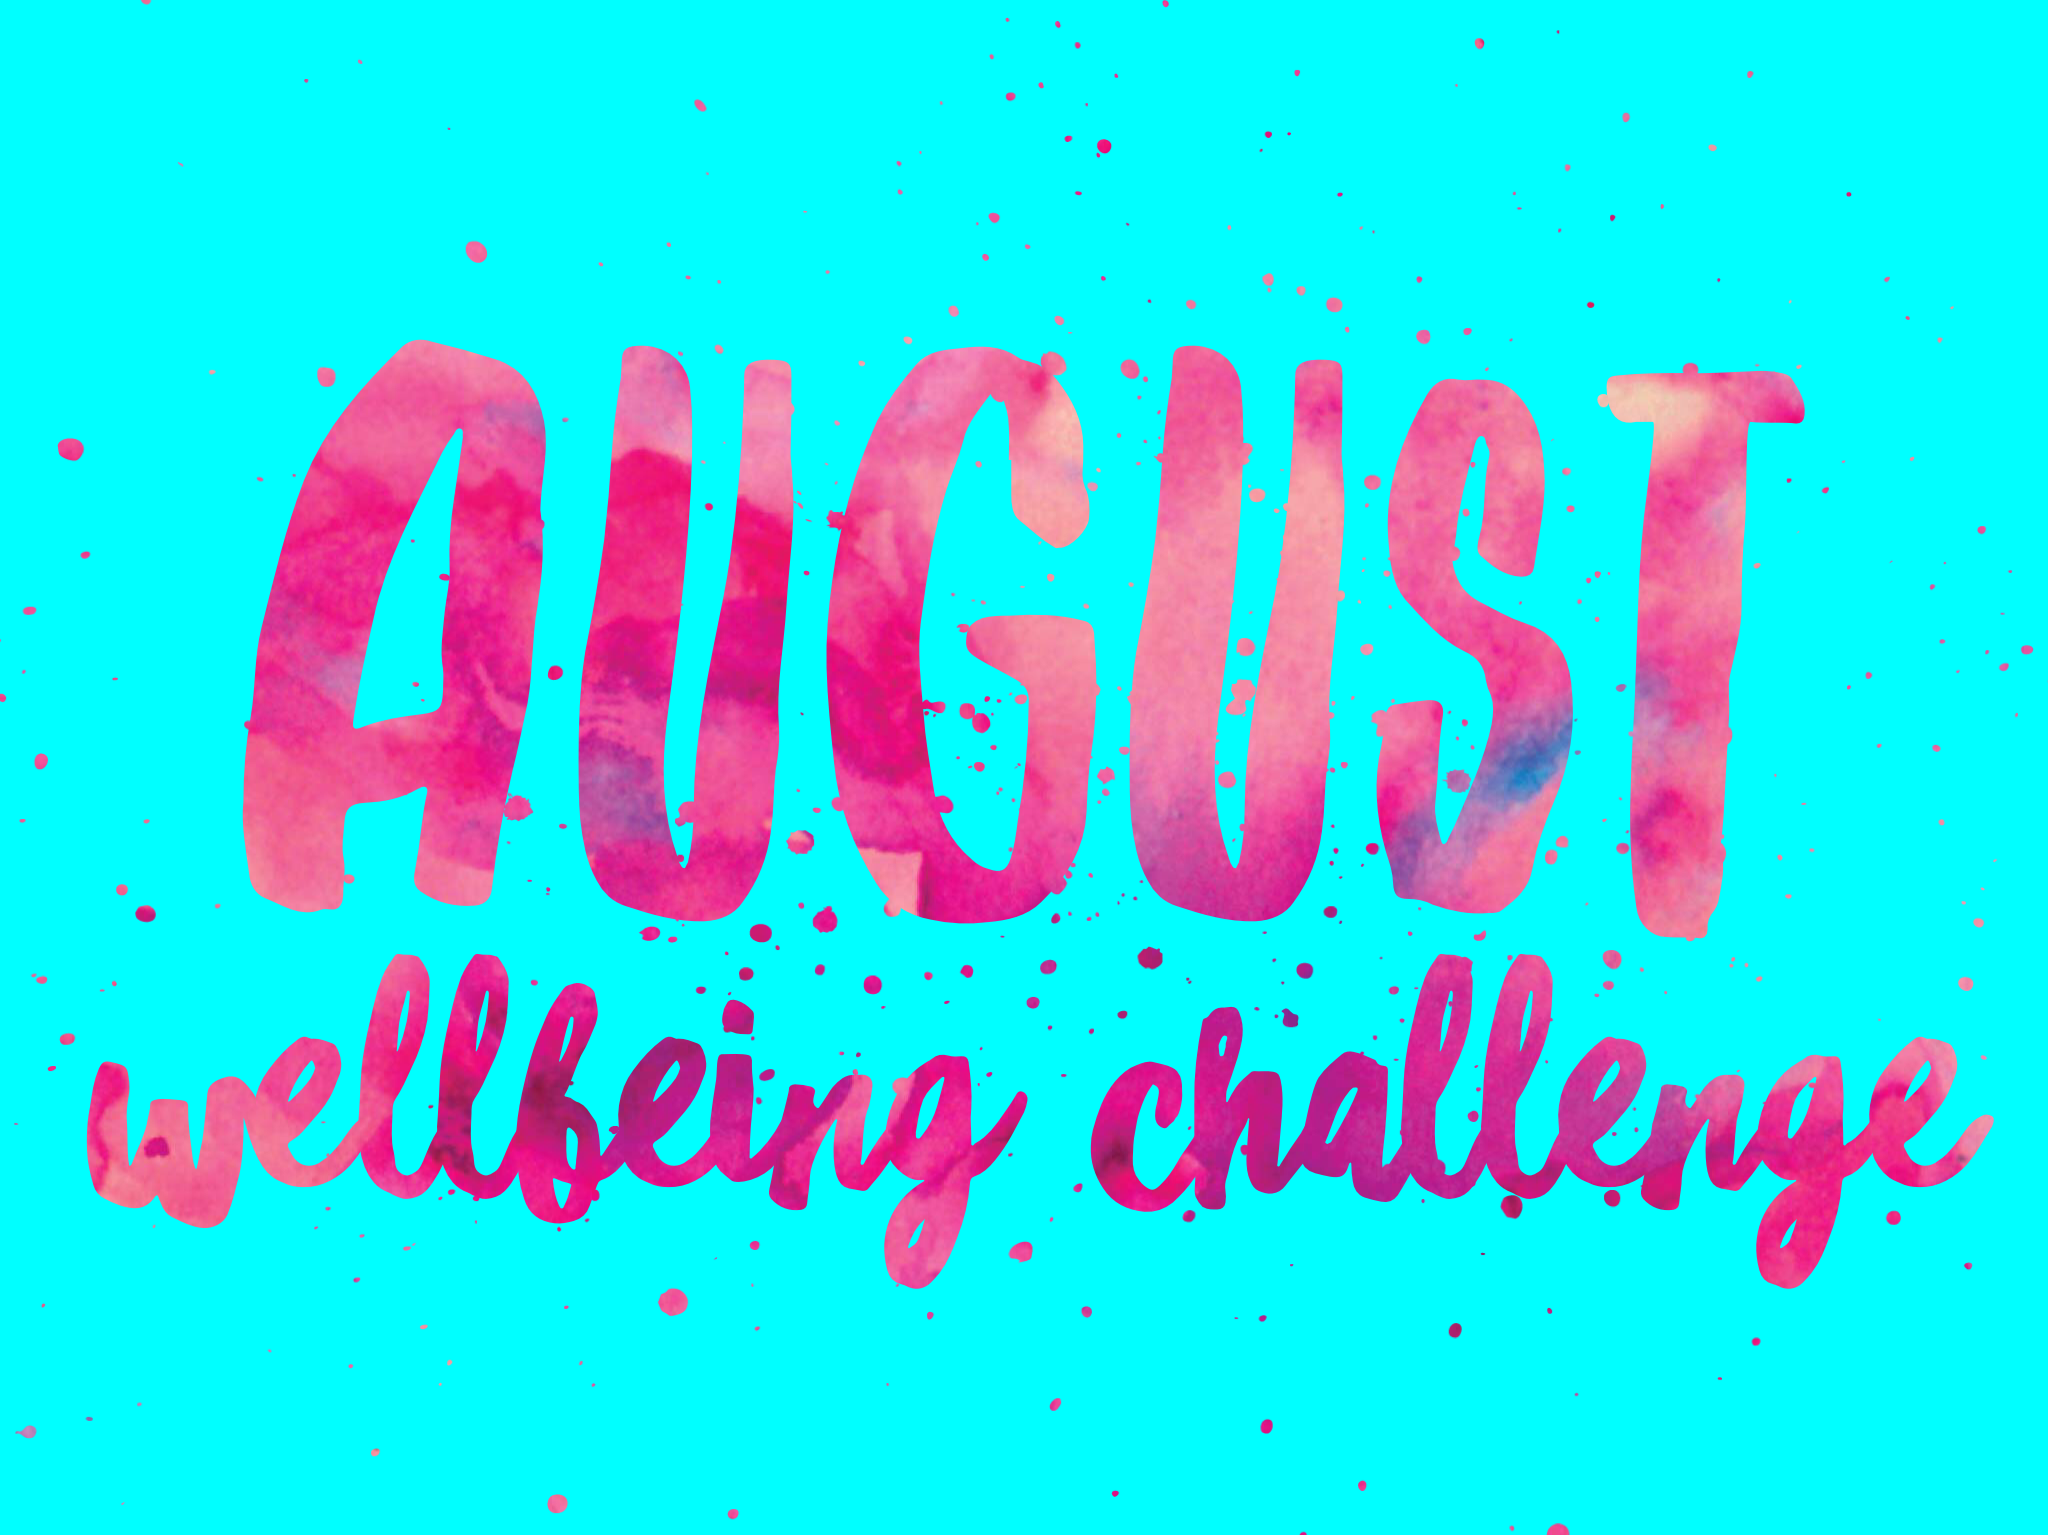 August Wellbeing challenge